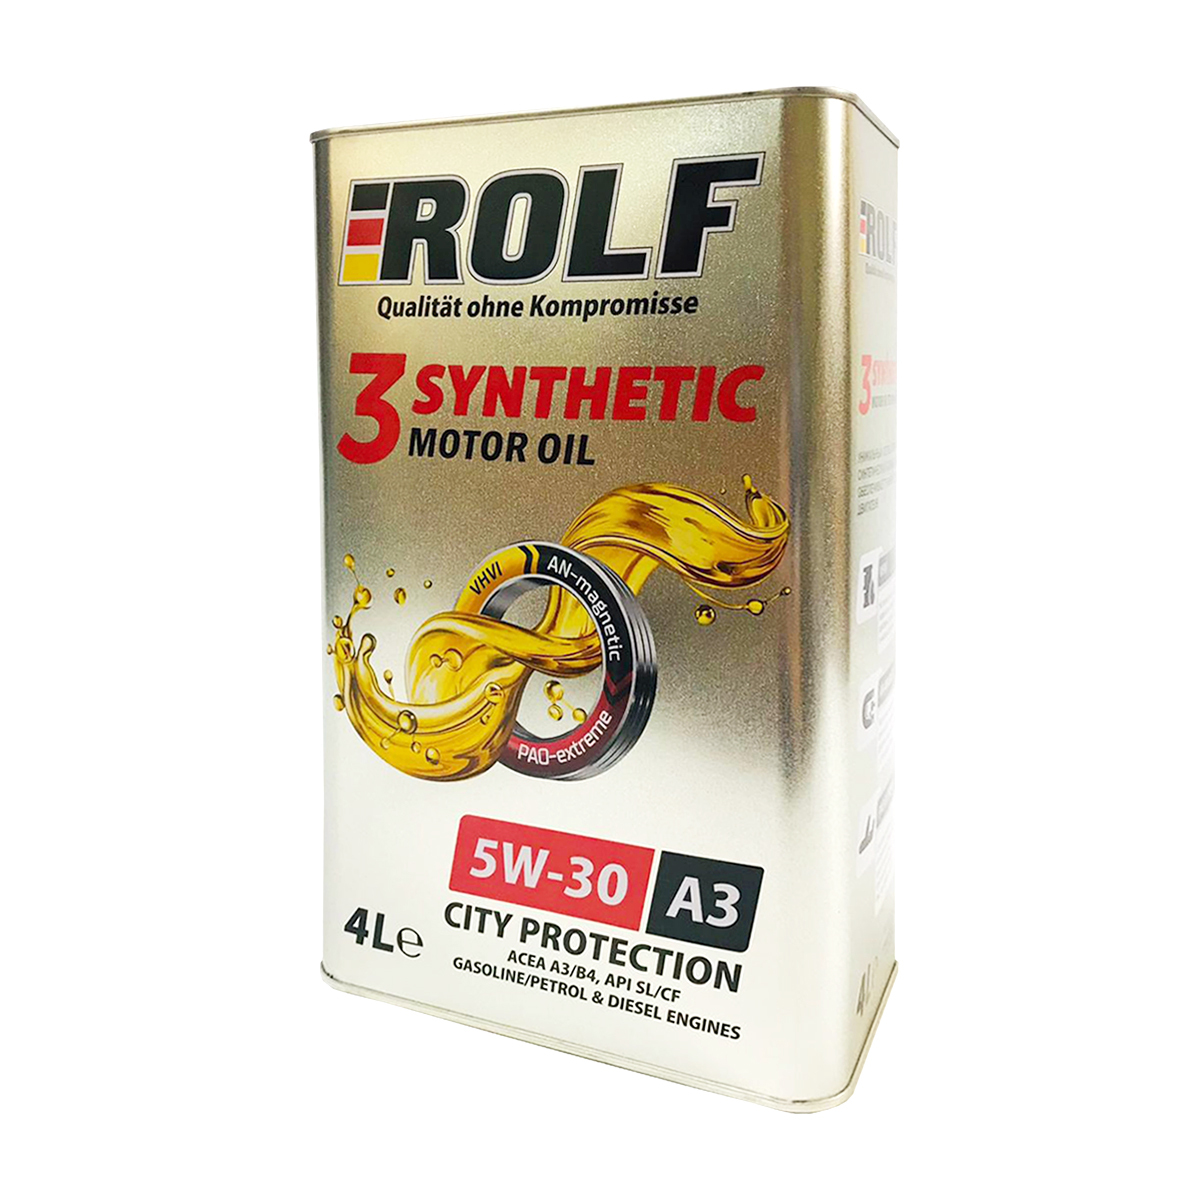 Характеристики моторного масла рольф. Моторное масло Rolf 3-Synthetic 5w-30, 4 л синтетическое. РОЛЬФ 3 синтетик 5w30. Rolf 3-Synthetic синт. 5w. Rolf 3-Synthetic 5/40 a3/b4.